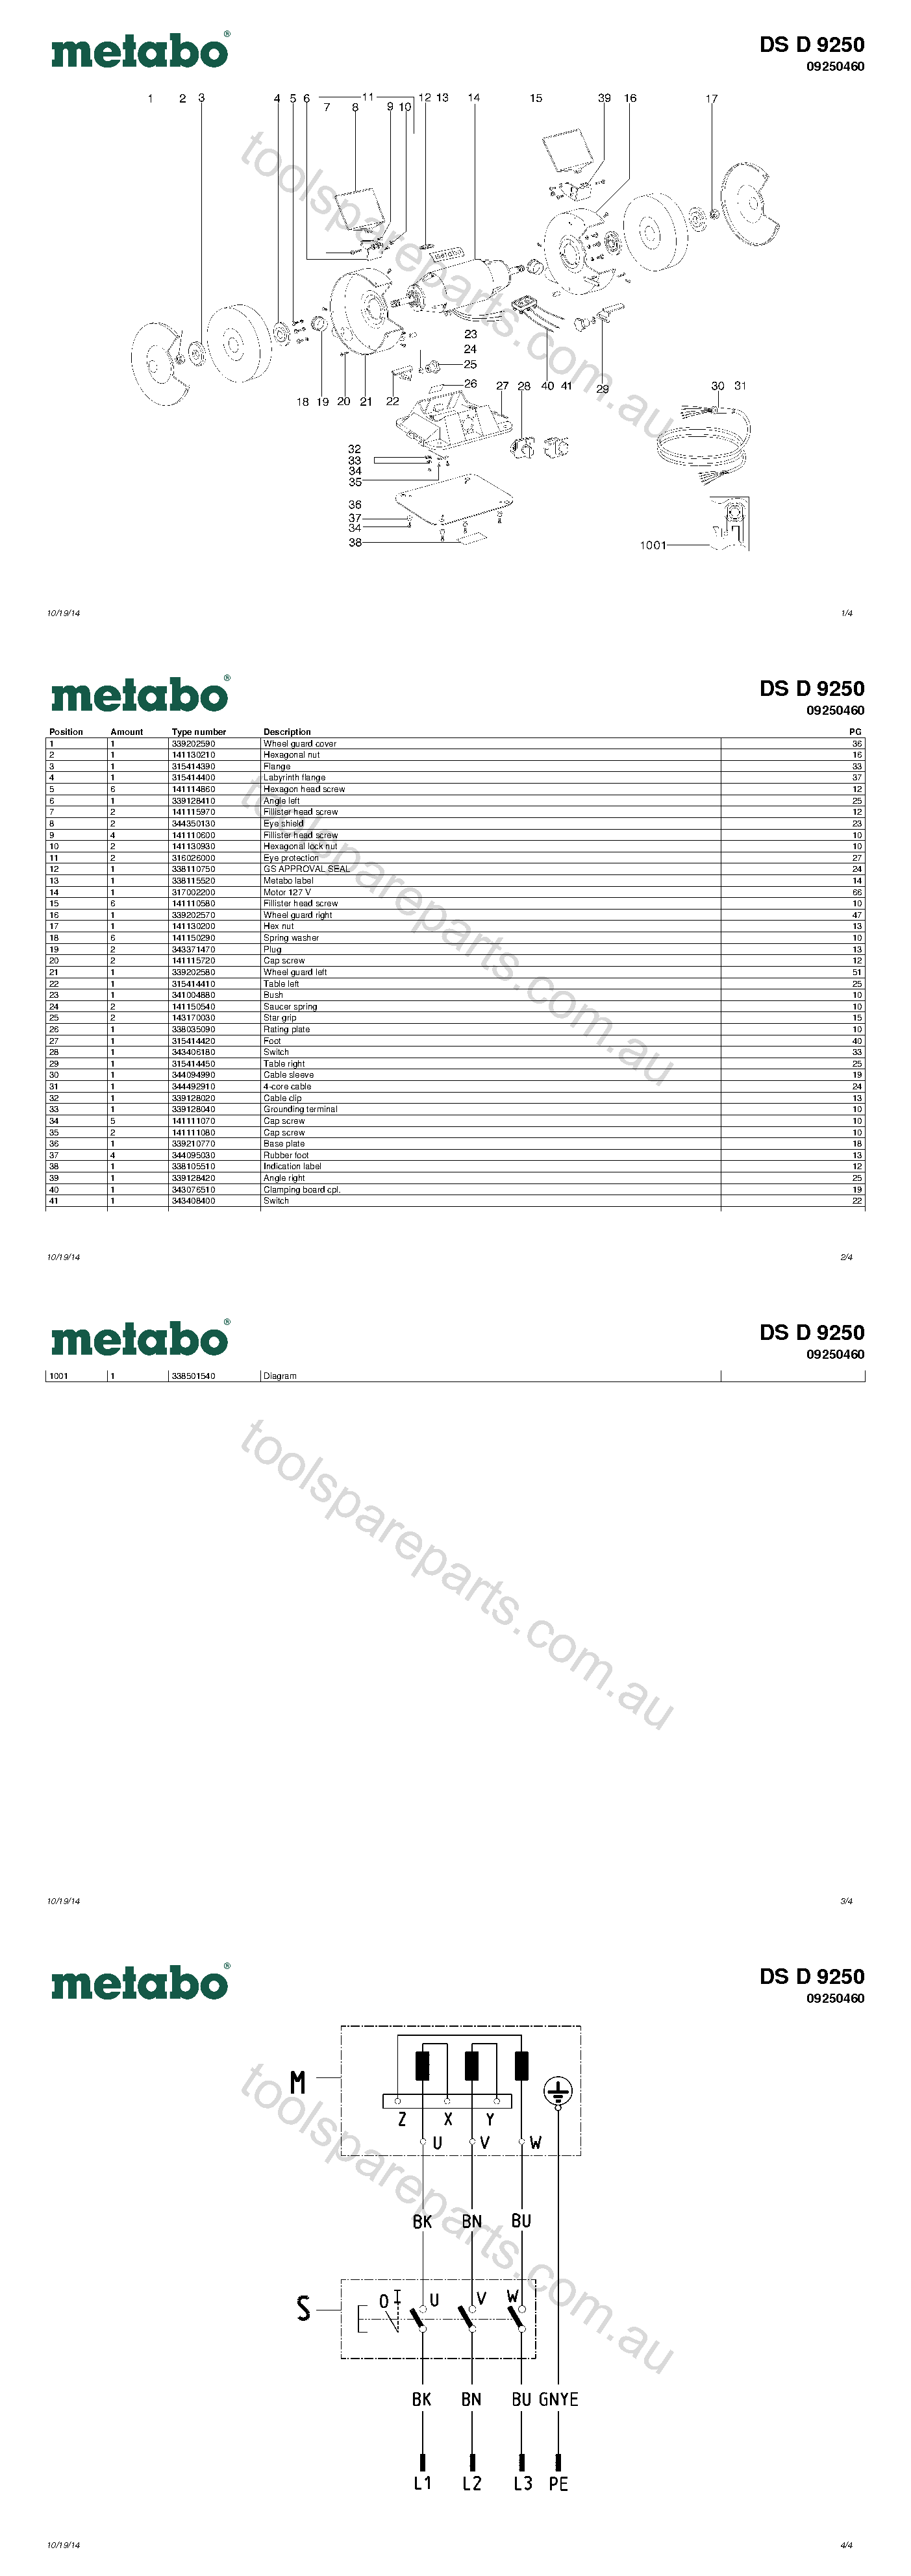 Metabo DS D 9250 09250460  Diagram 1